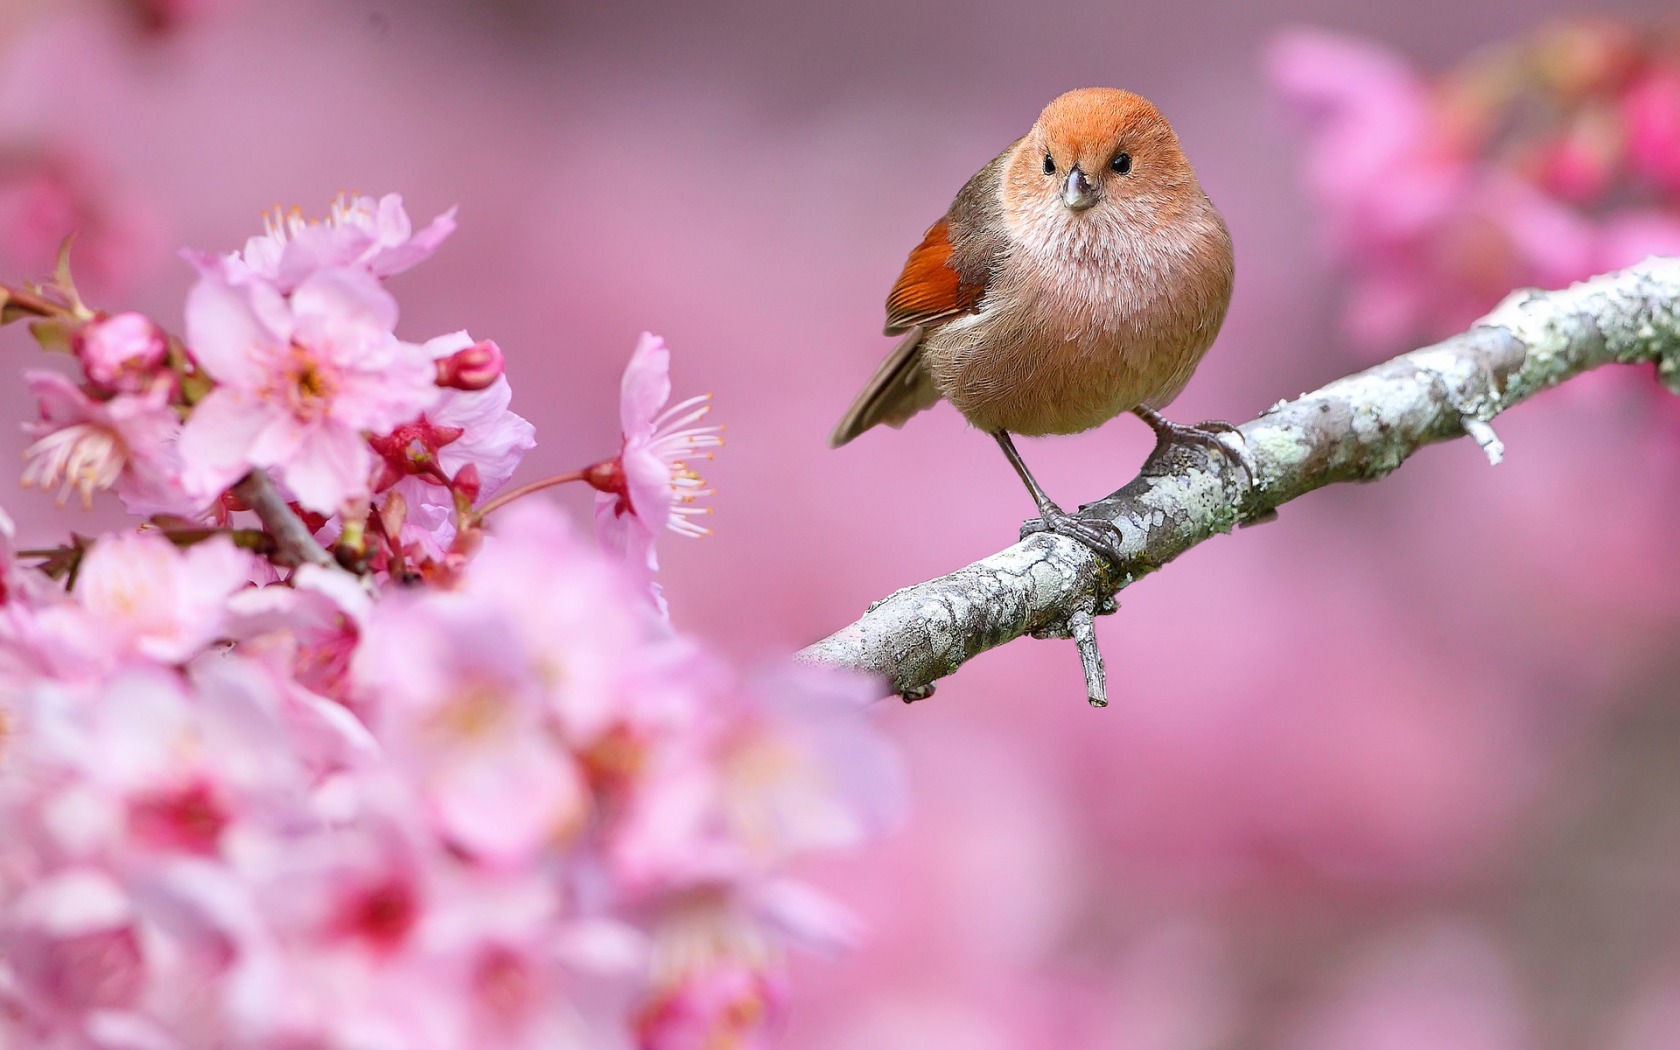 Bird And Spring Flower wallpaper by LadyGaga RevelWallpapersnet